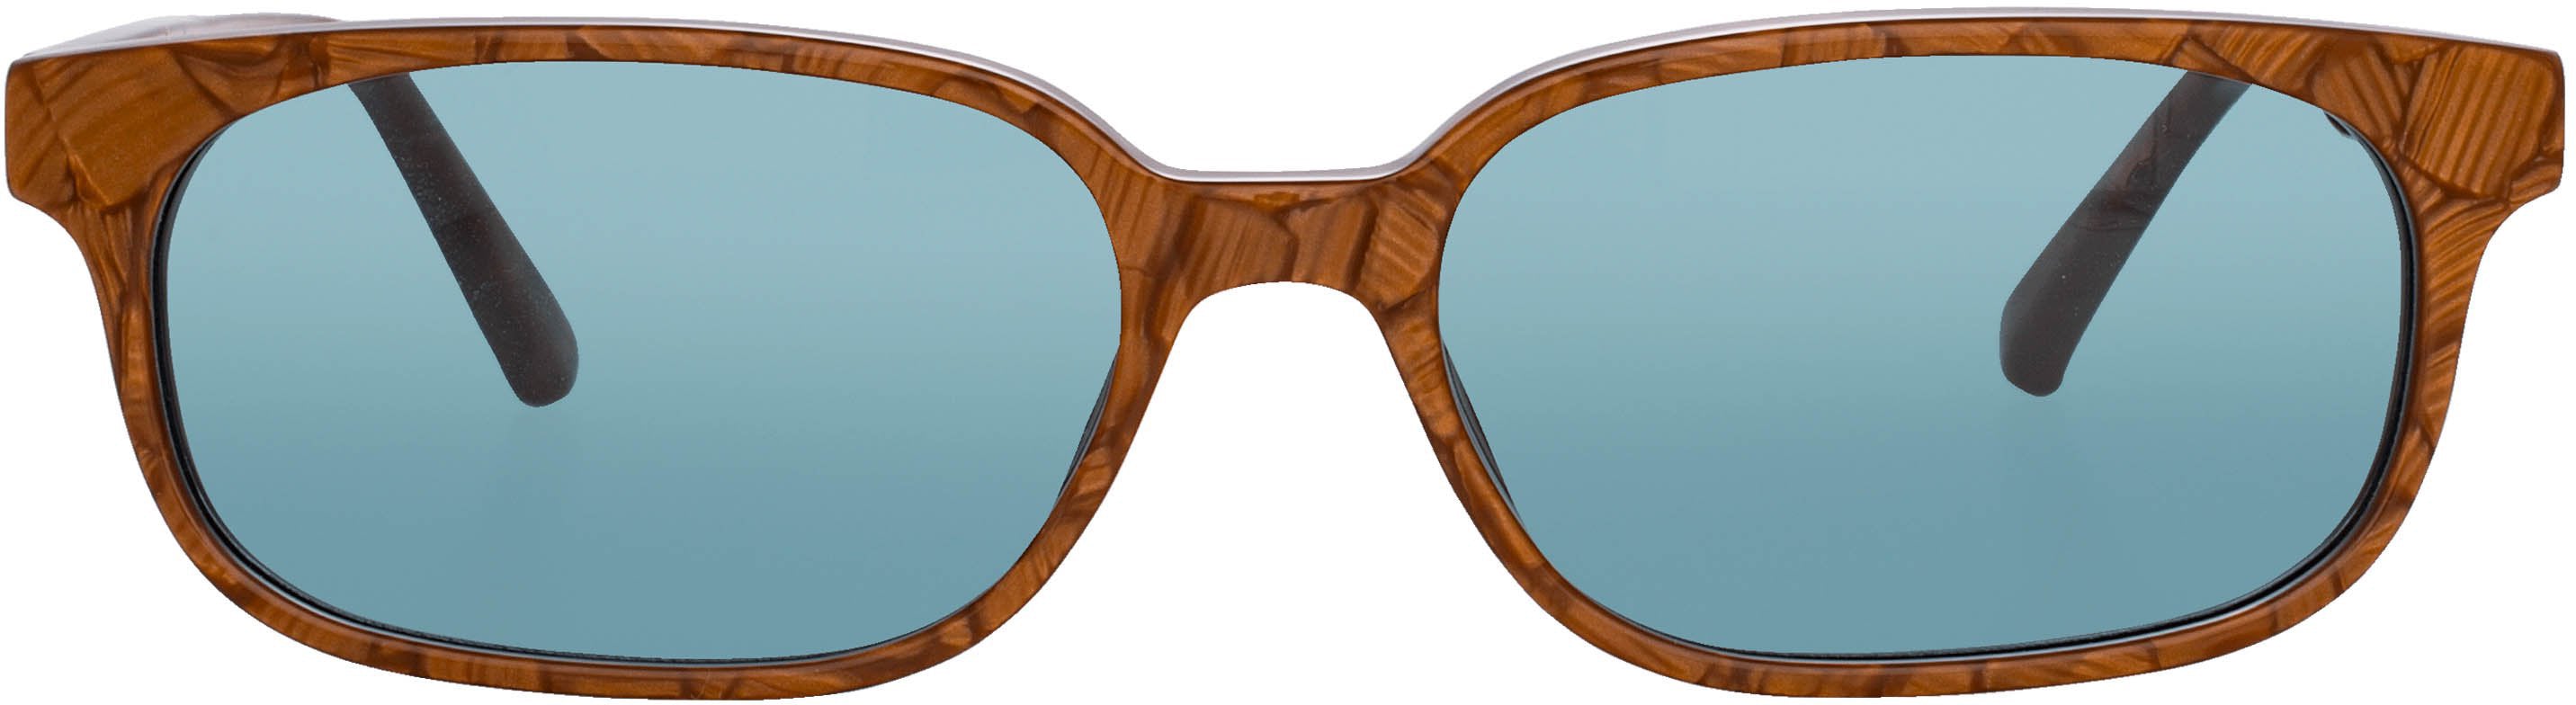 Color_ATTICO9C3SUN - The Attico Gigi Rectangular Sunglasses in Brown and Turquoise